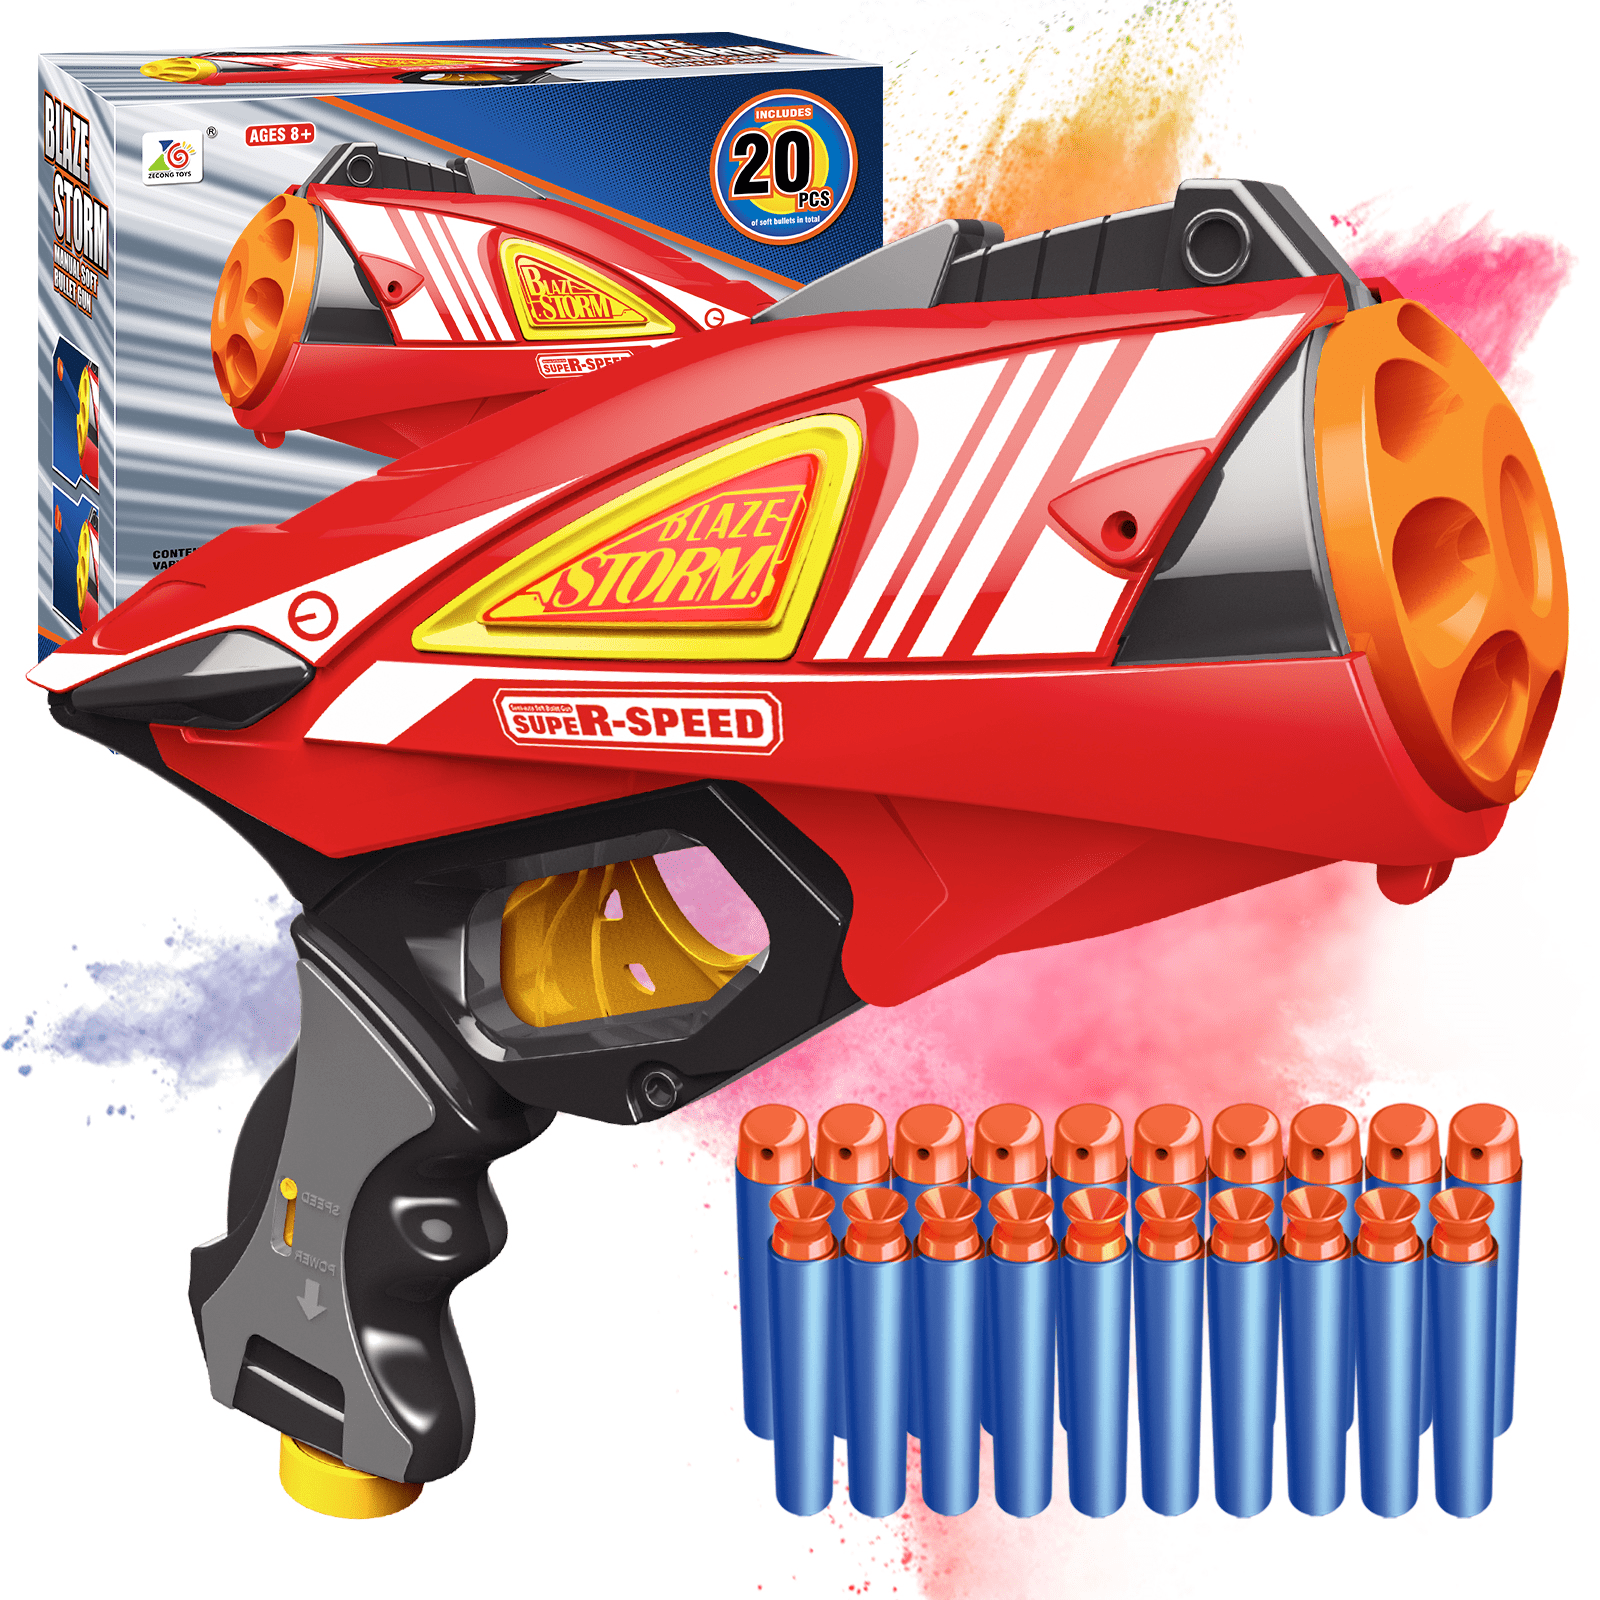 Toy Gun with Bullet, Blaster Gun Toy Pistol with 20 Pcs Soft Foam Darts, 6-Dart  in Rotating Barrel, Toy Foam Blaster Guns Christmas for Girls Kids 6+ 